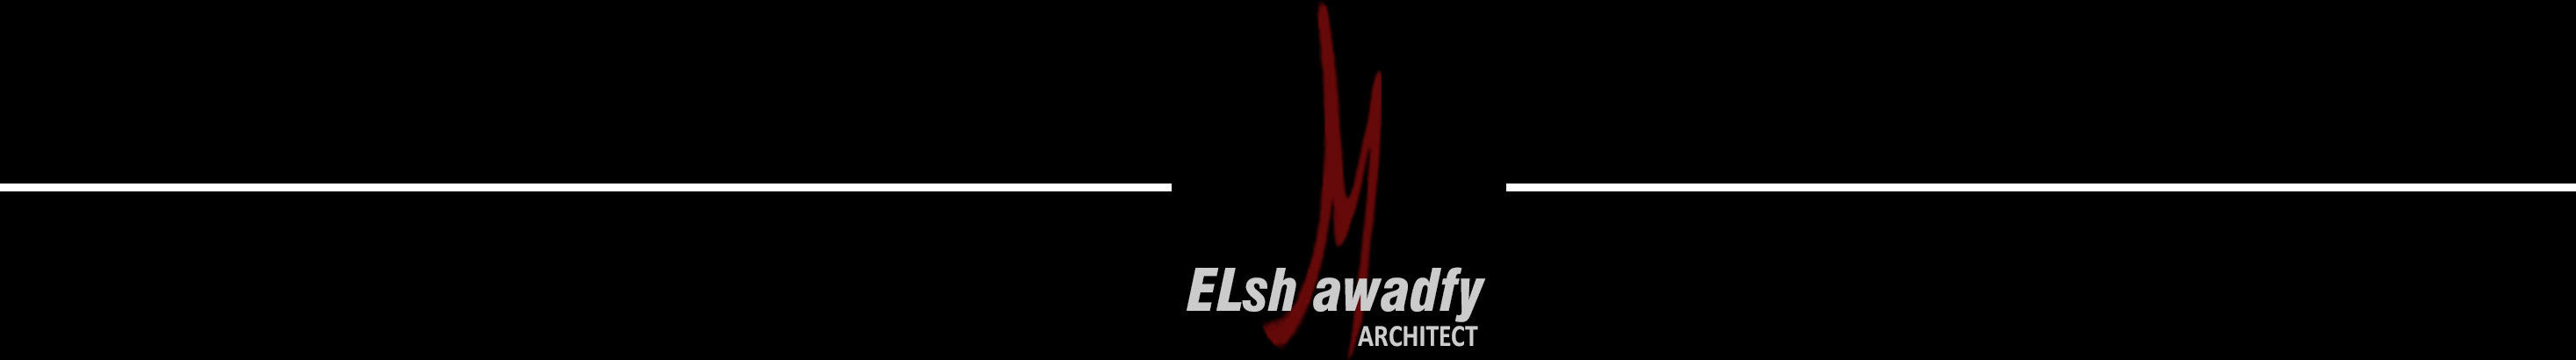 Mahmoud Elshawadfy's profile banner